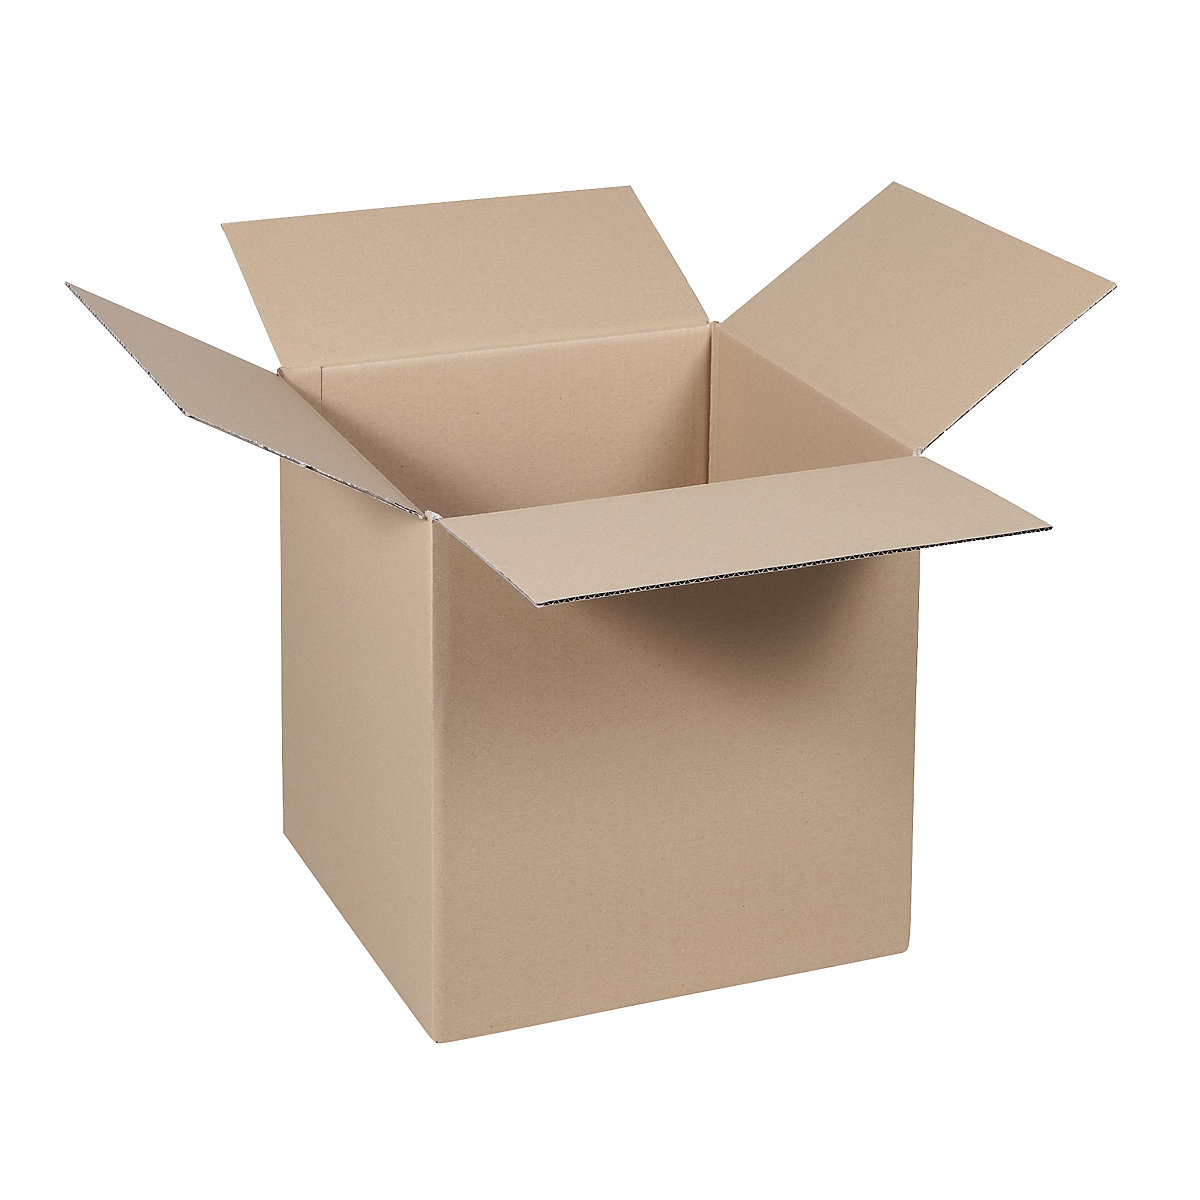 Folding cardboard box, FEFCO 0201, made of single fluted cardboard, internal dimensions 300 x 300 x 300 mm, pack of 100-15